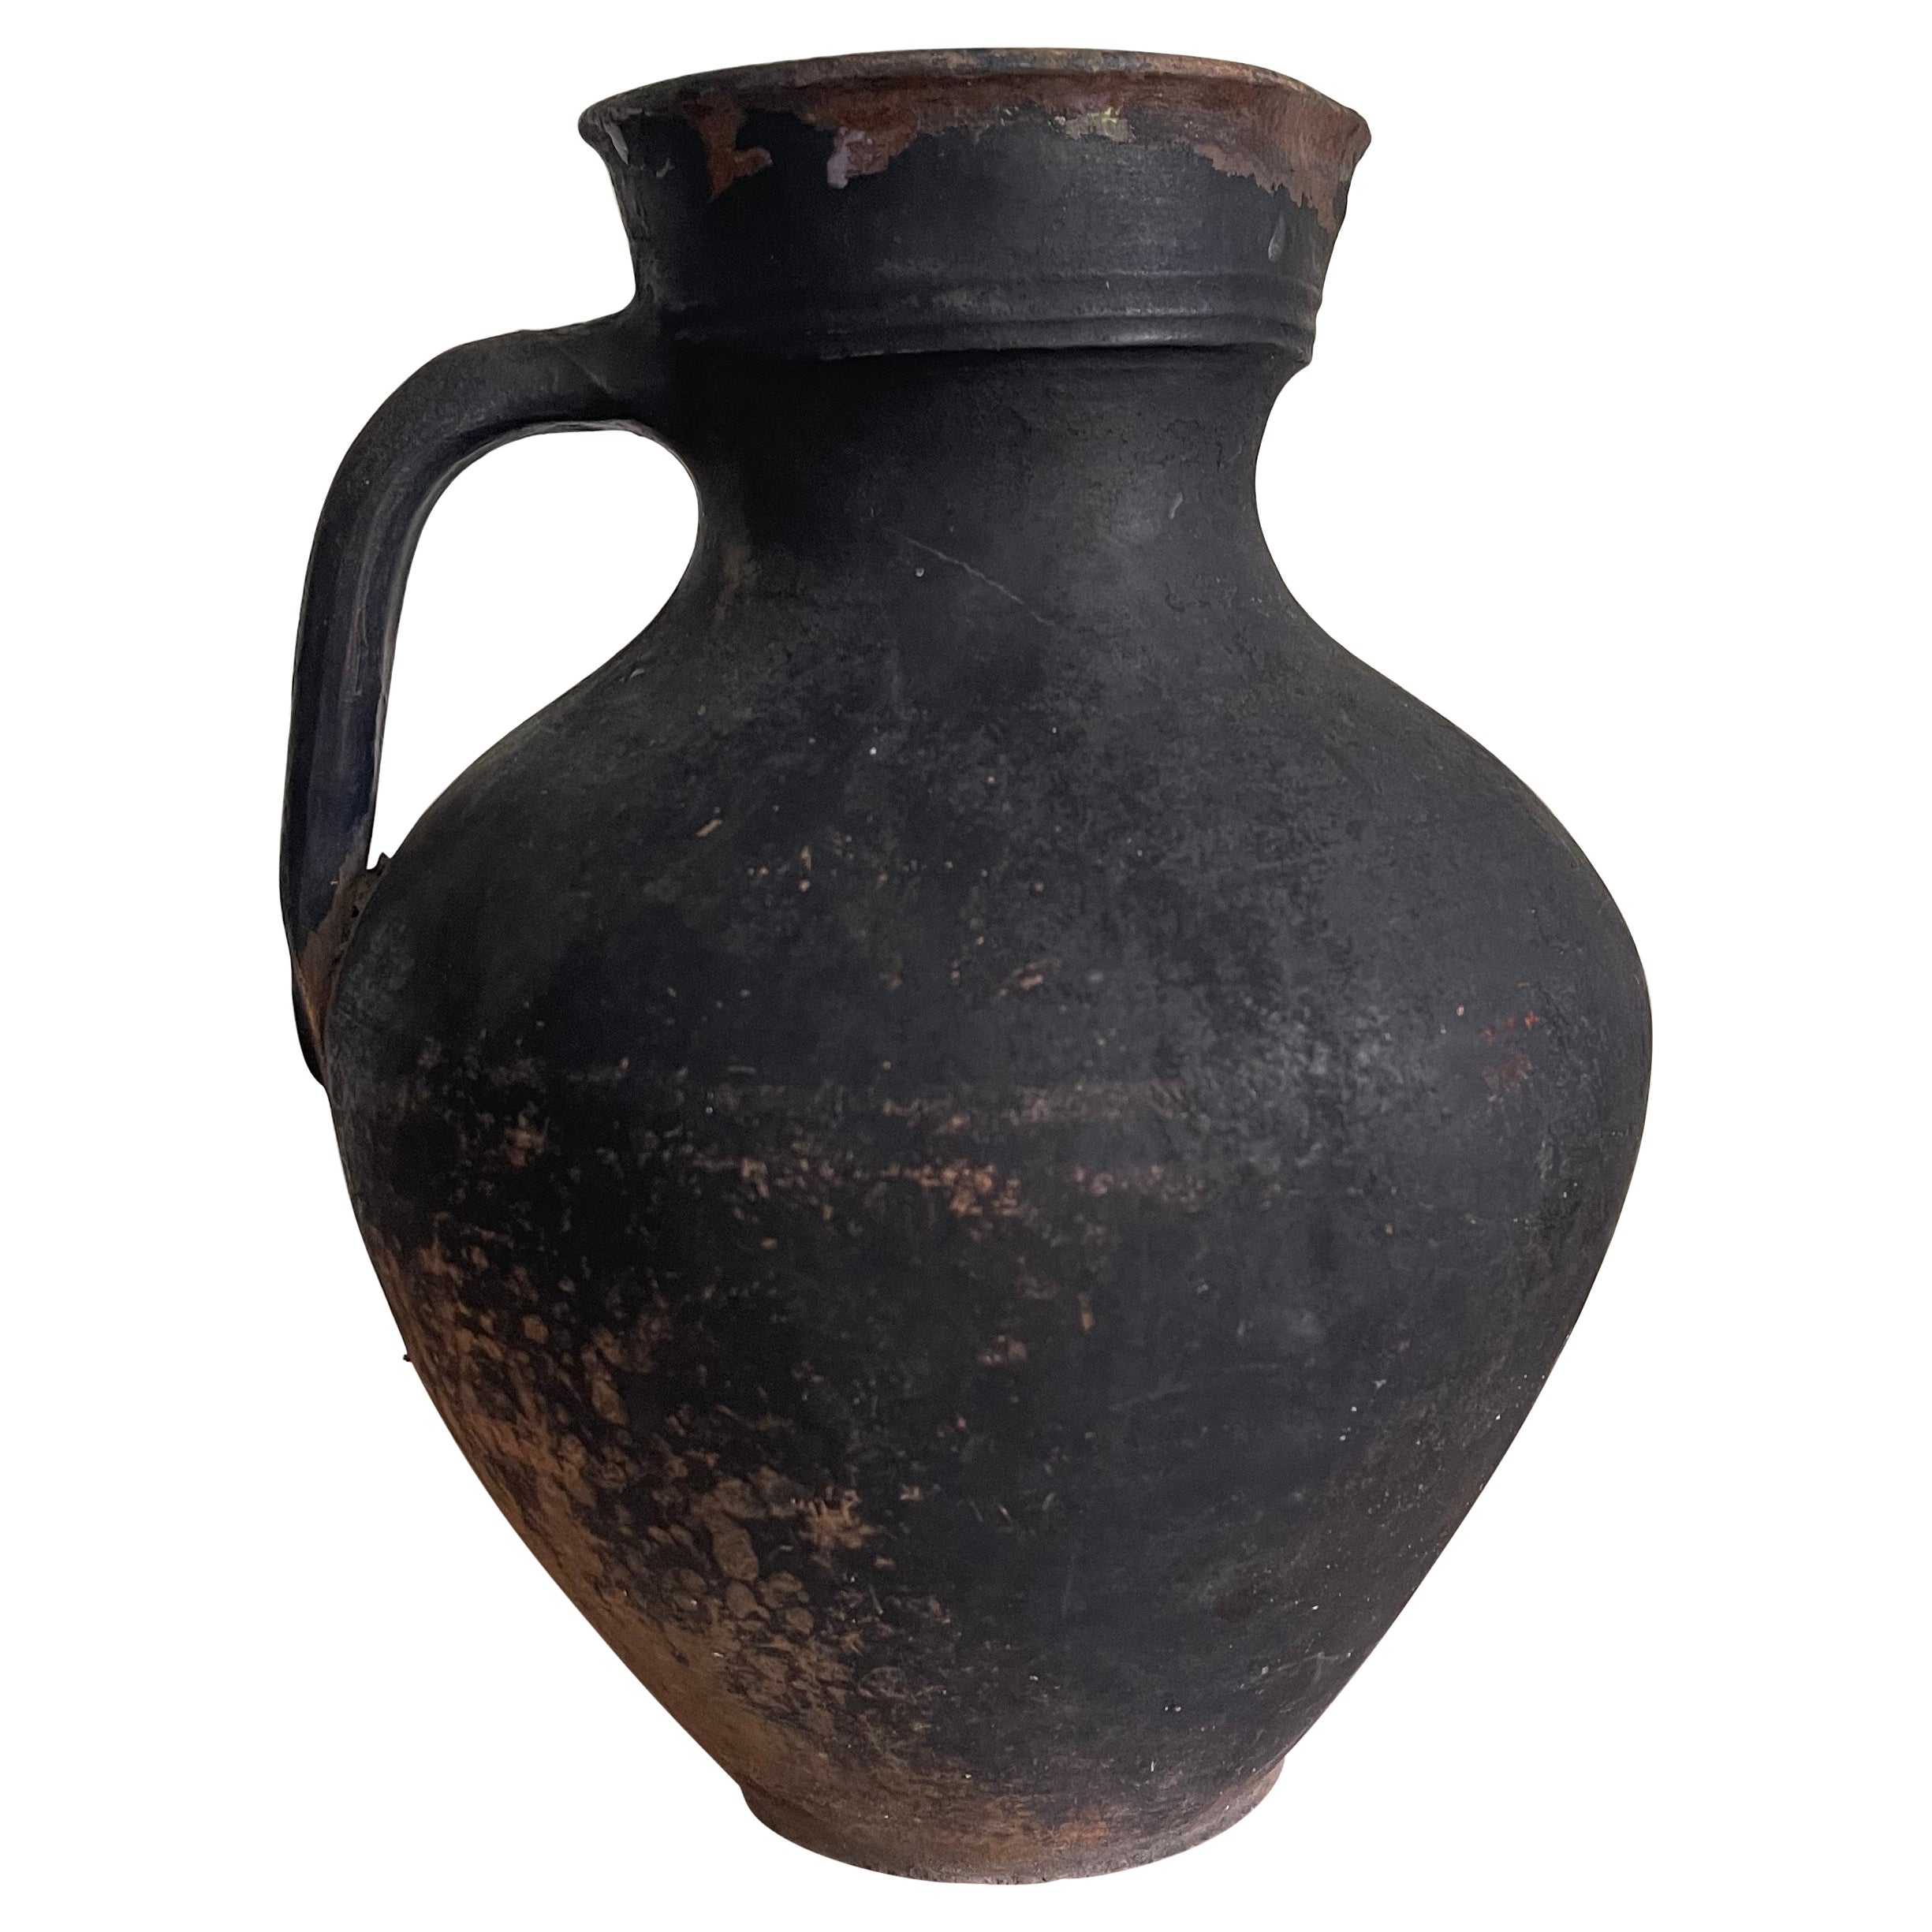 Rustic Antique Clay Vessel